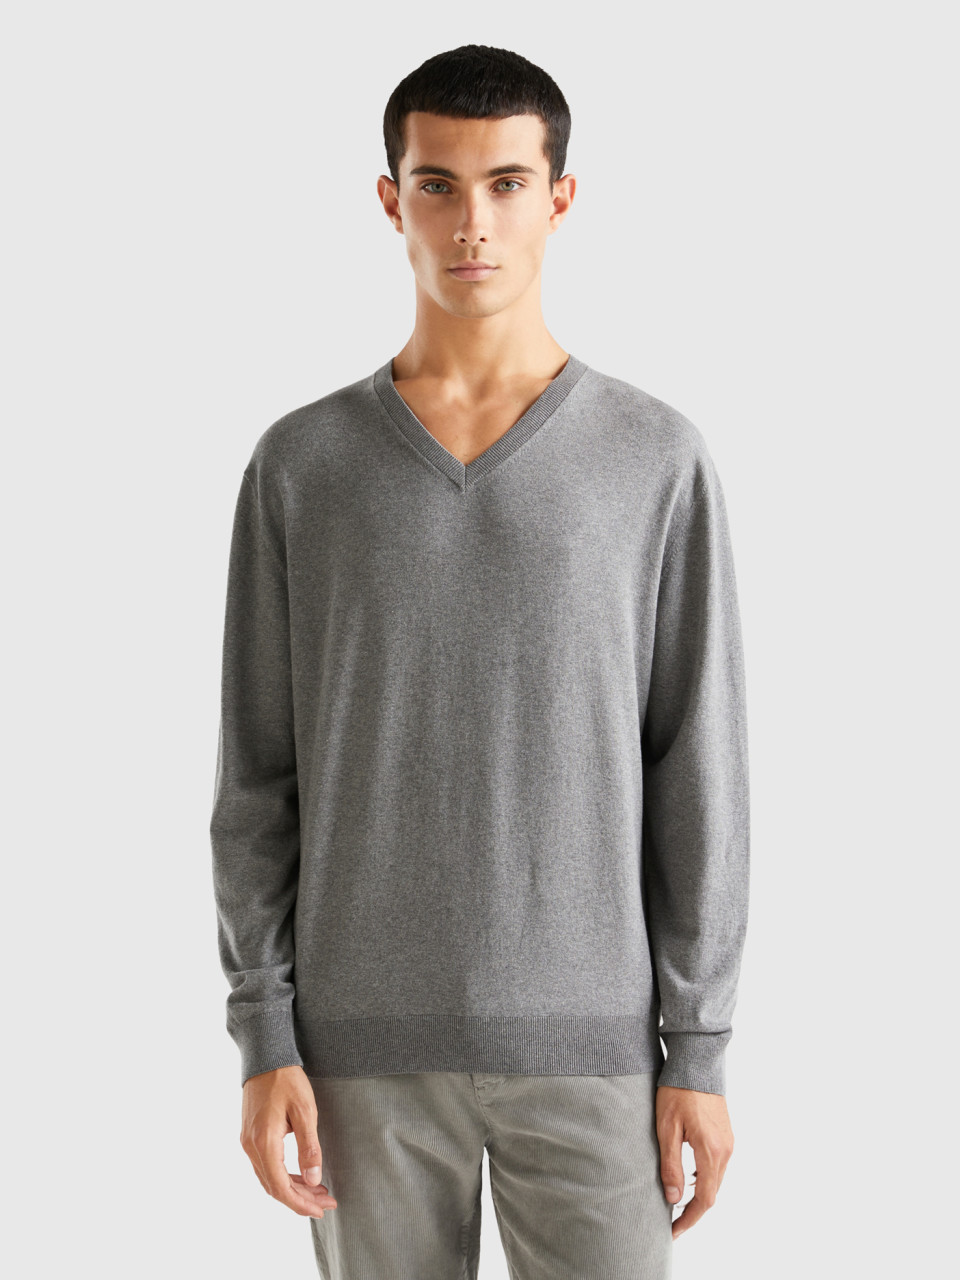 Benetton, V-neck Sweater In Lightweight Cotton Blend, Dark Gray, Men